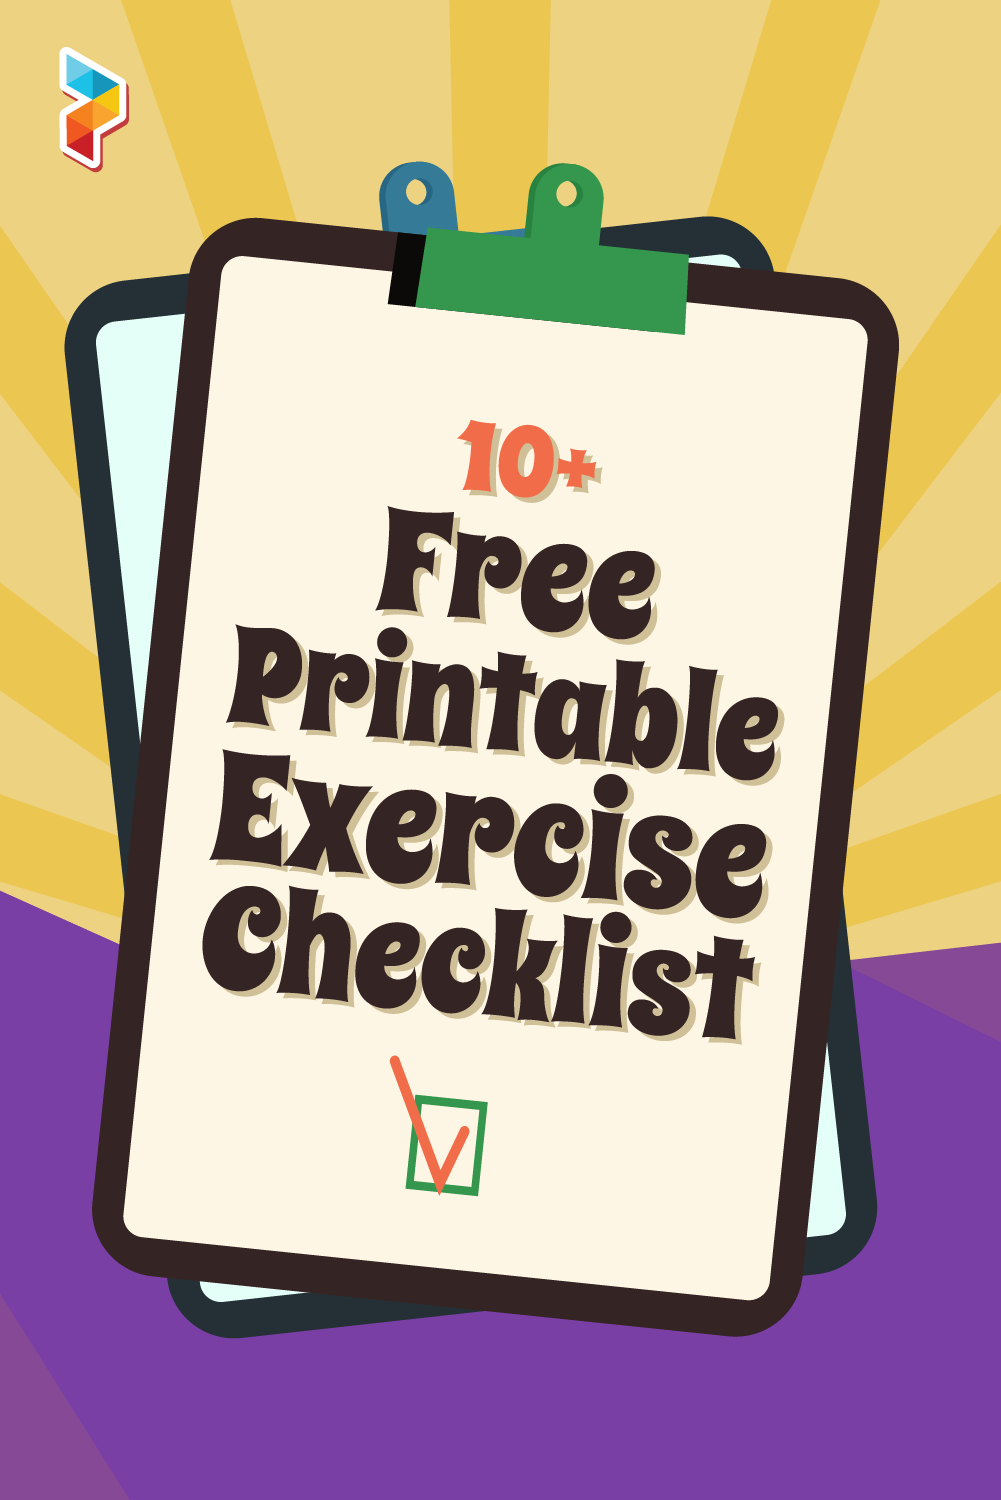 Exercise Checklist